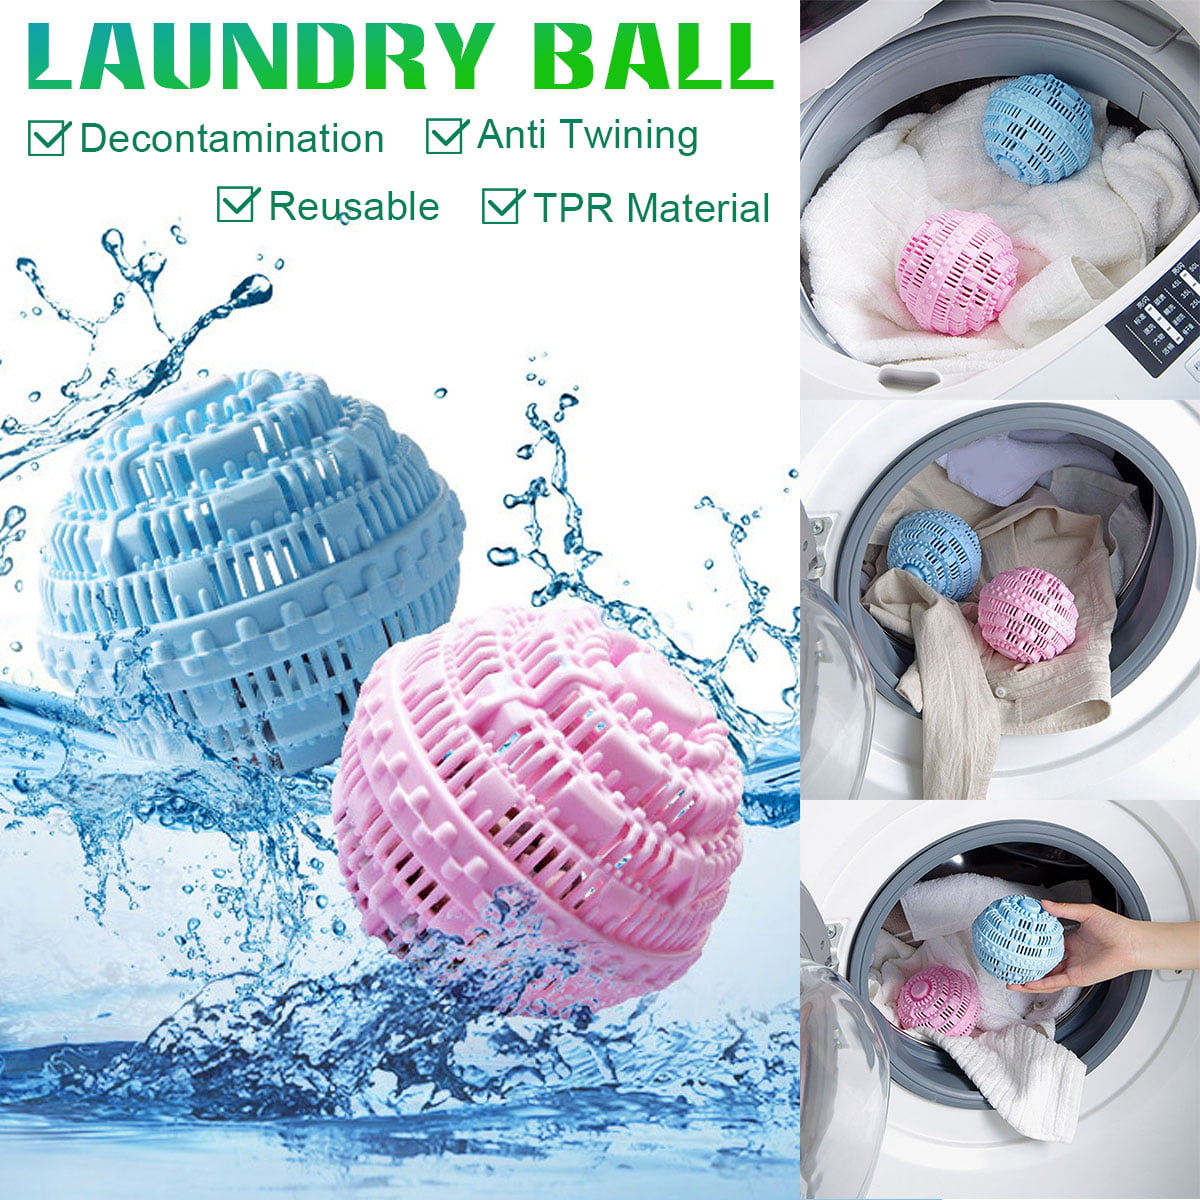 laundry balls for washing machine